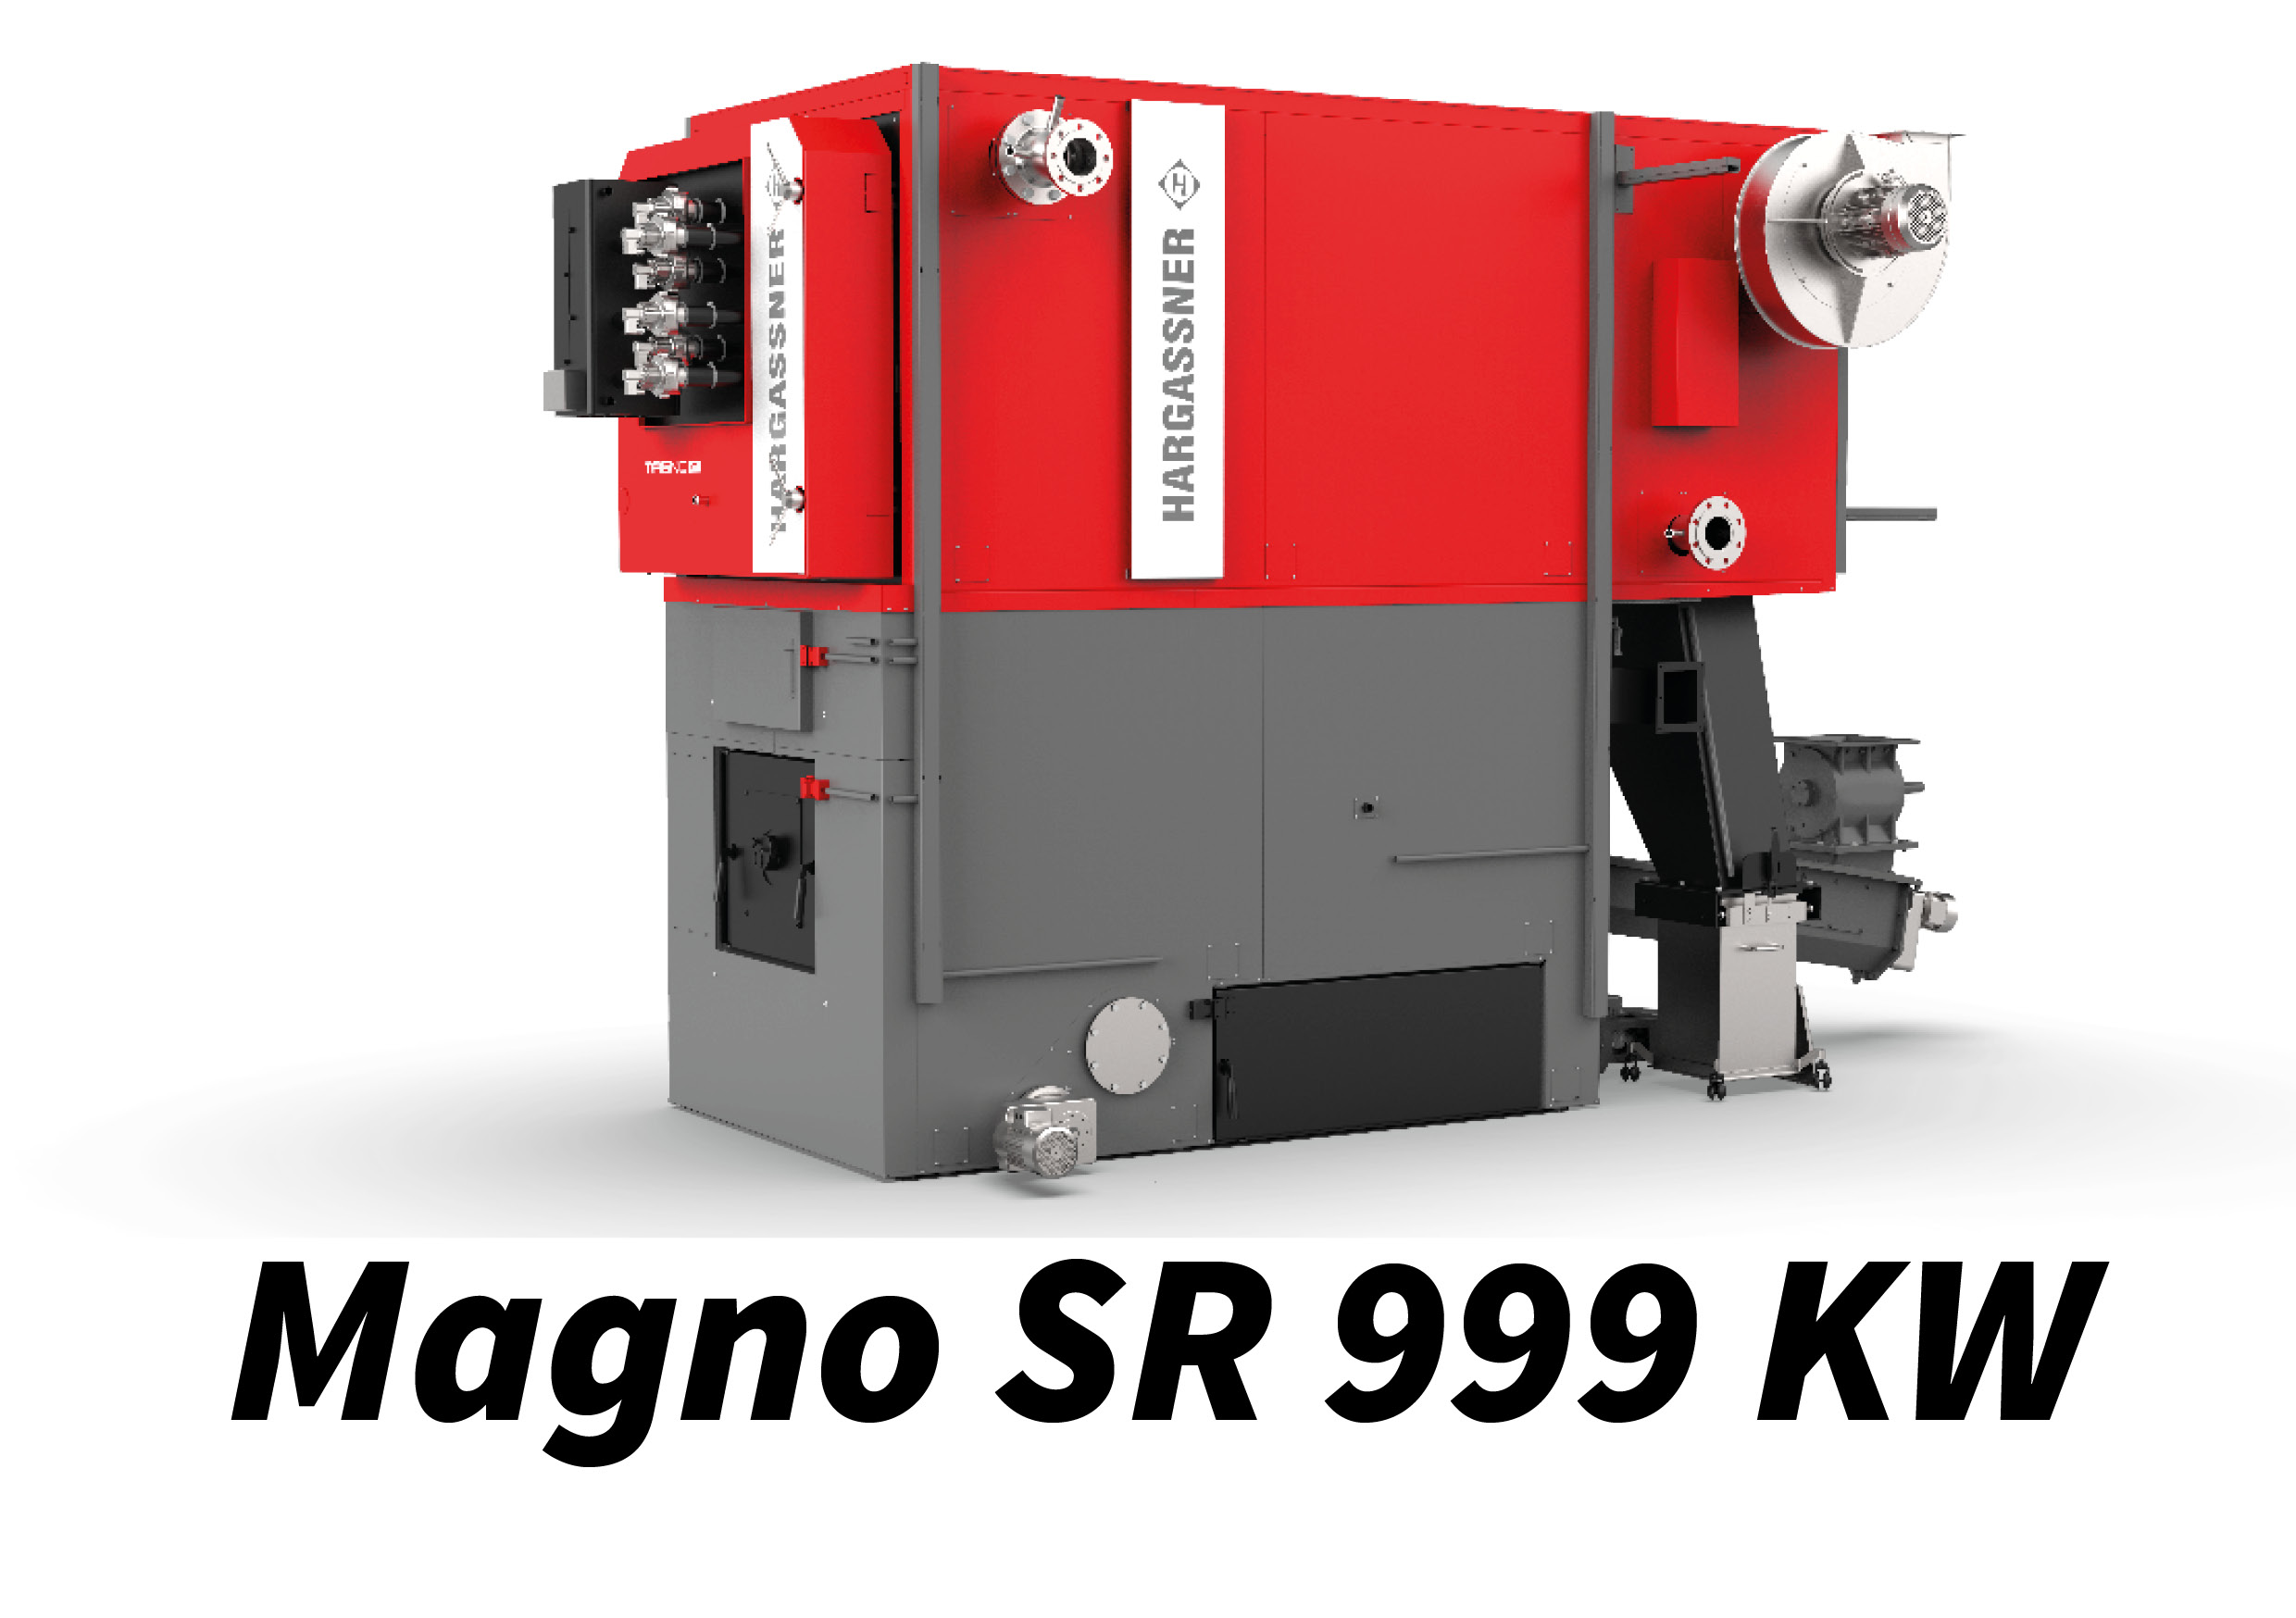 Magno SR 999 kW